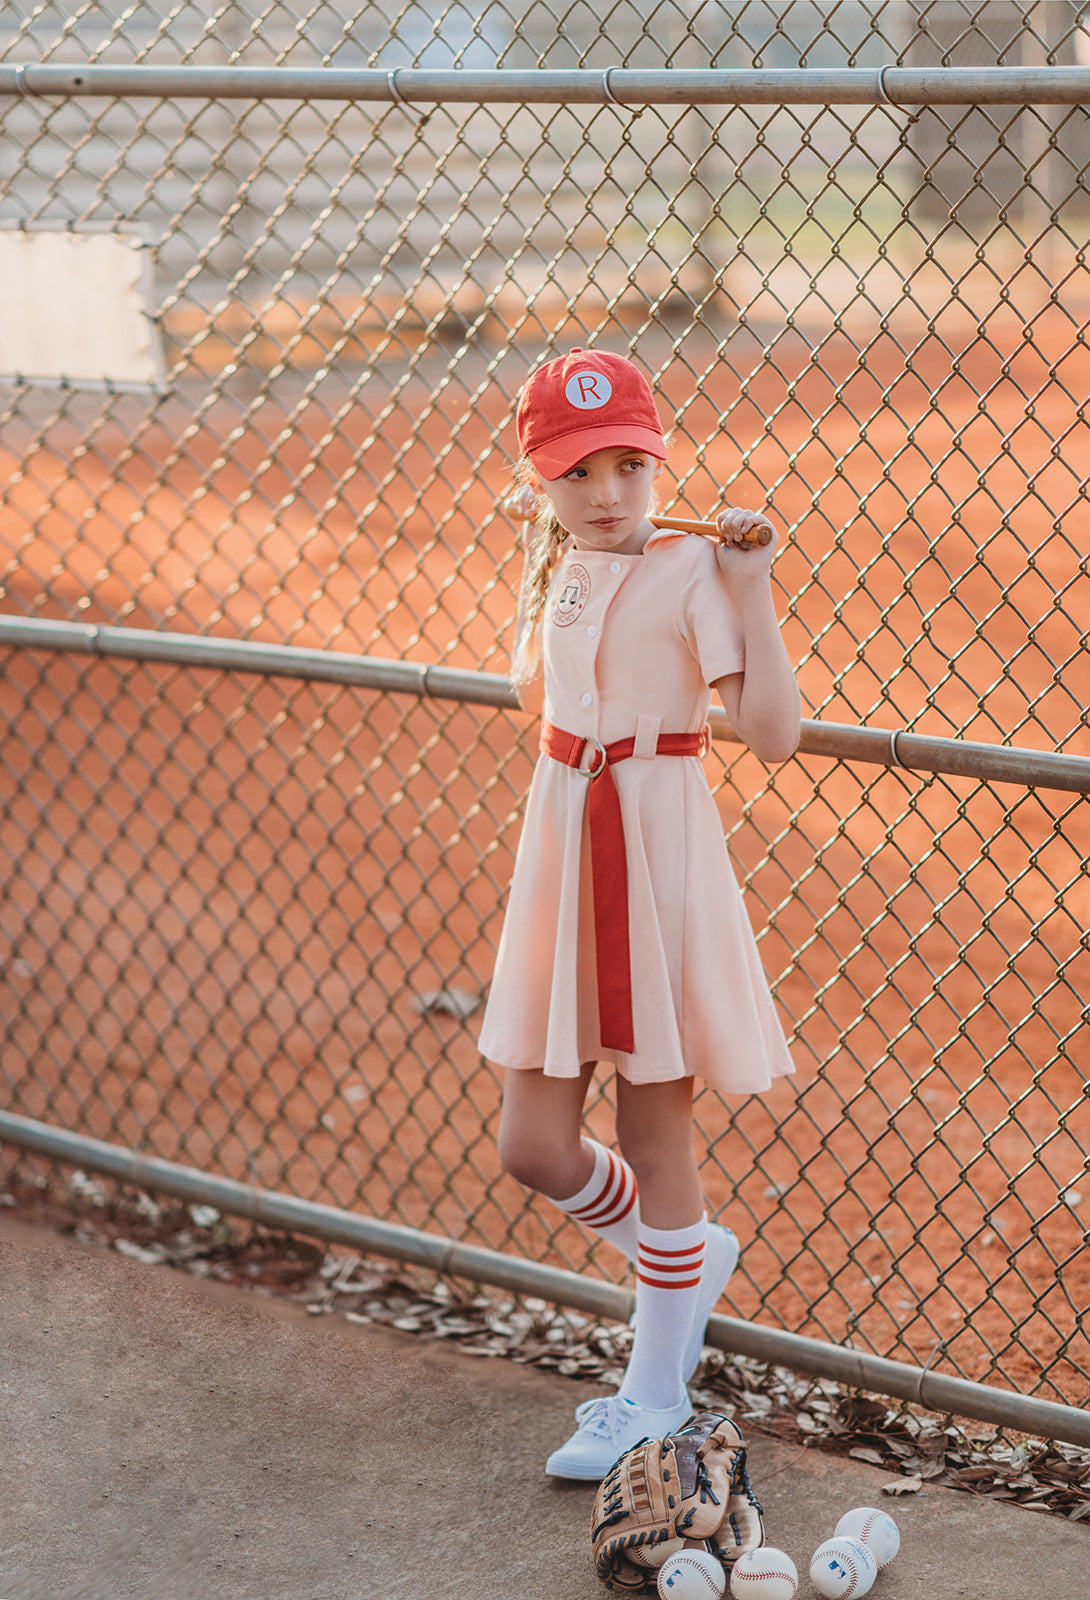 vintage baseball uniform